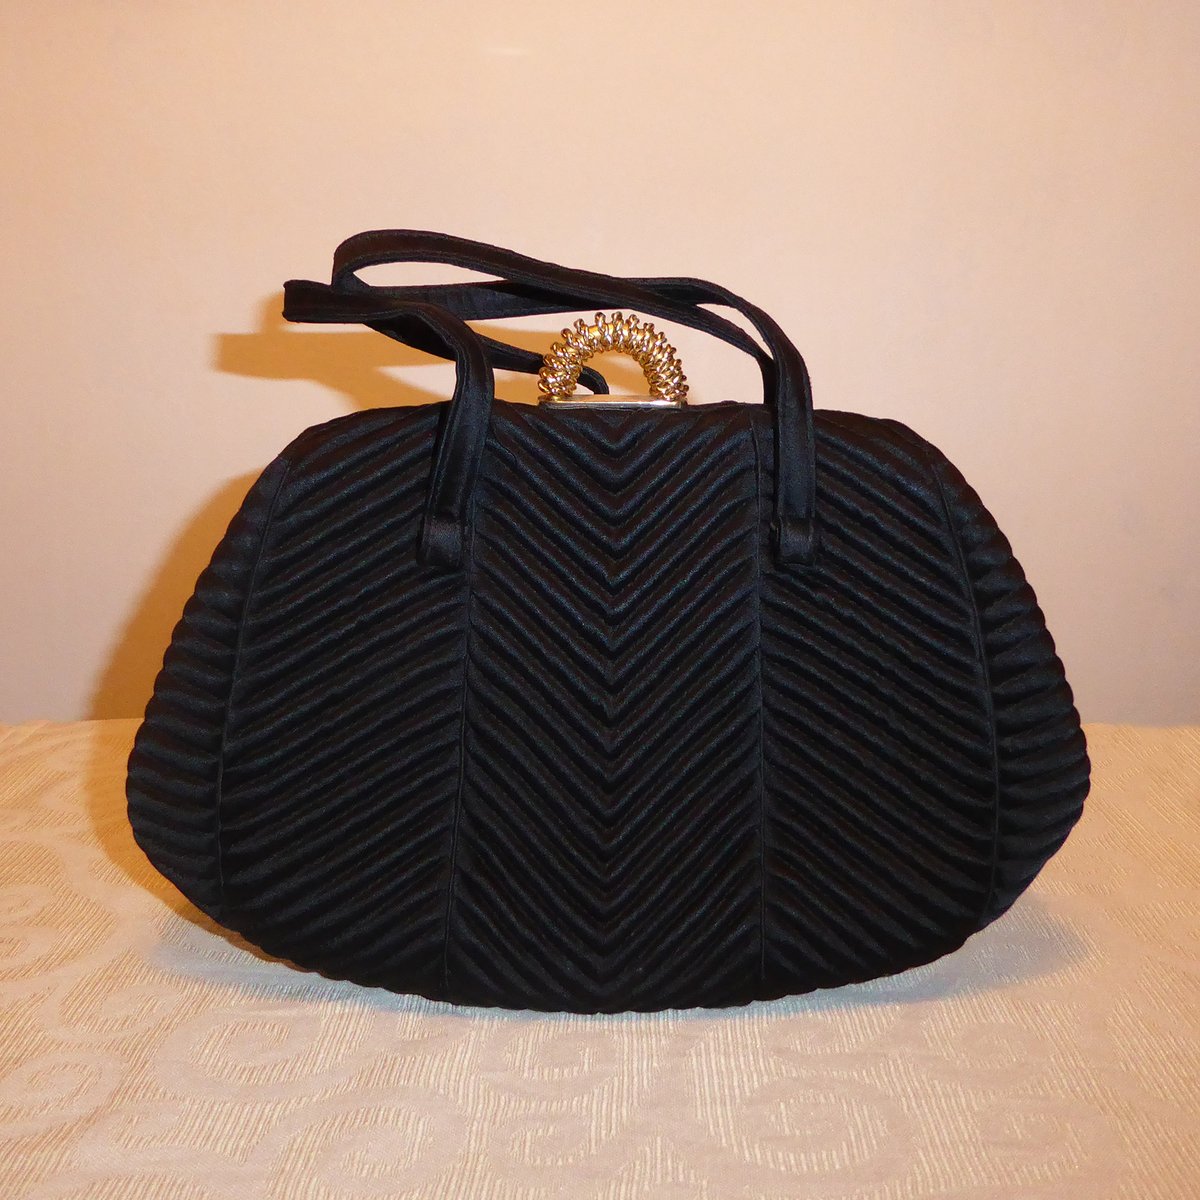 Vintage Handbag ~ Very stylish ~ Find it in my Etsy shop ~ REDUCED ~ #vintage #handbag #vintagebag #millyfiory millyfiory.etsy.com